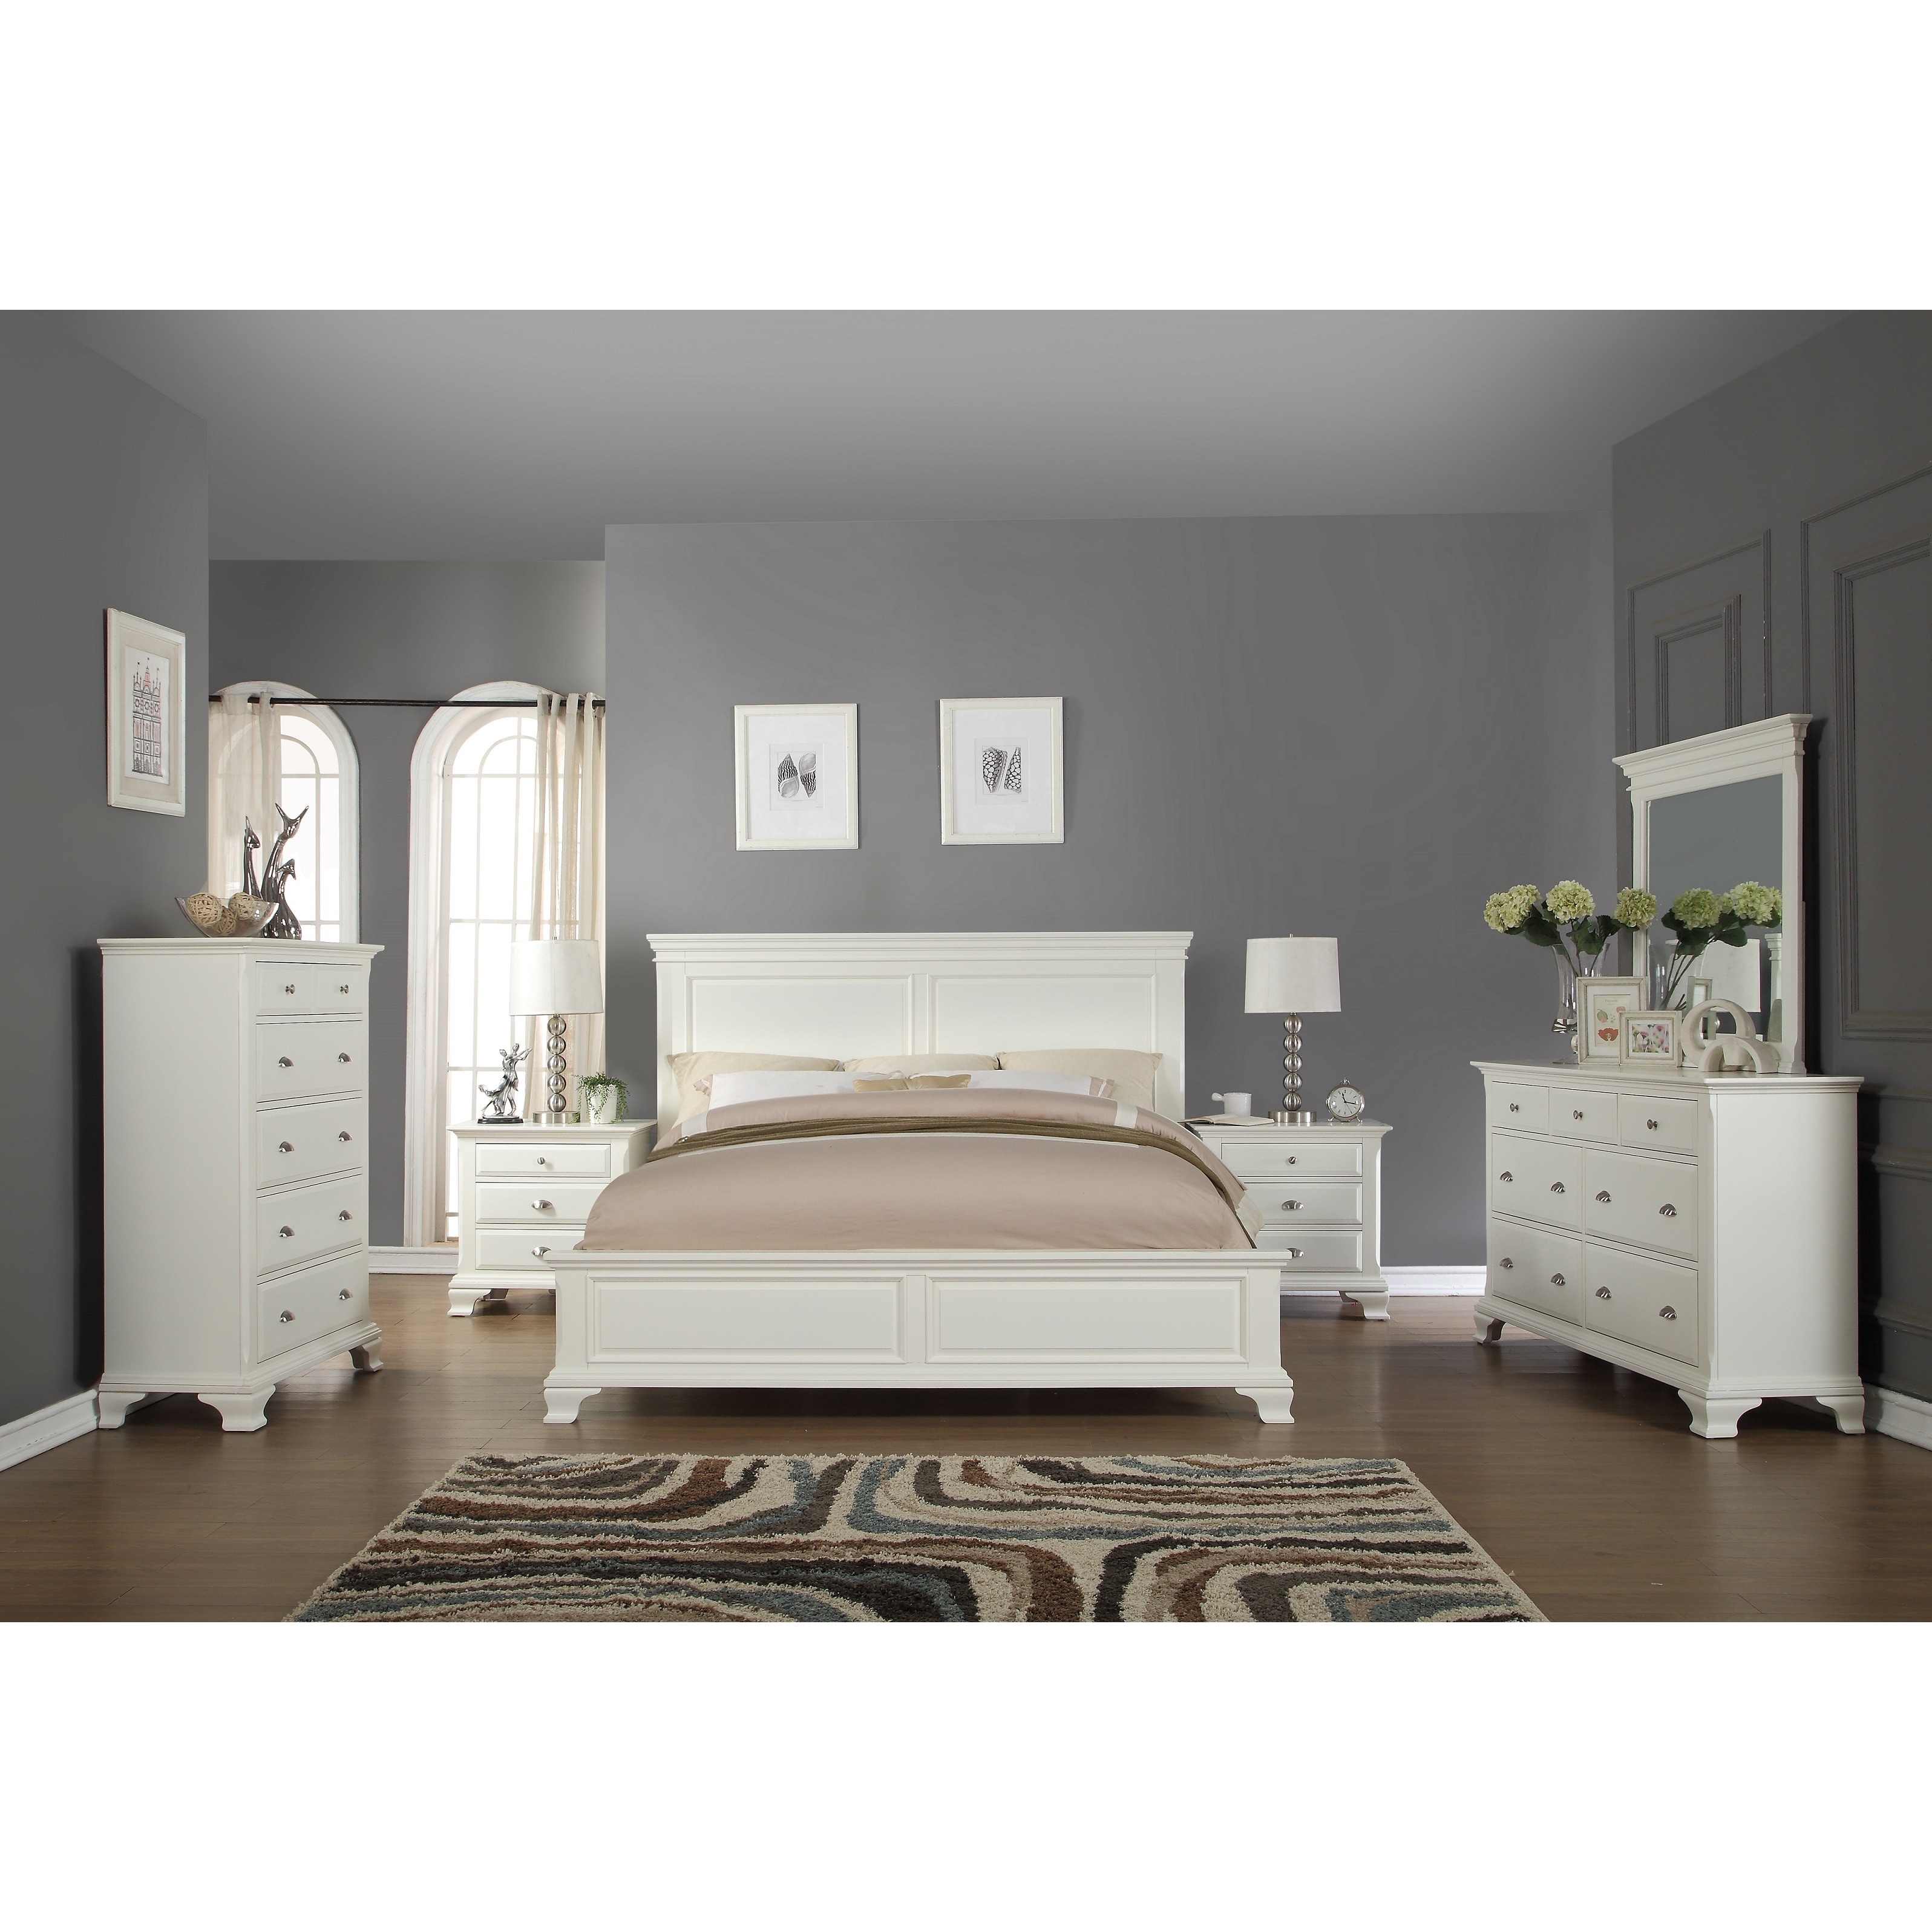 Laveno White Wood King 6 Piece Bedroom Furniture Set Overstock 12064541